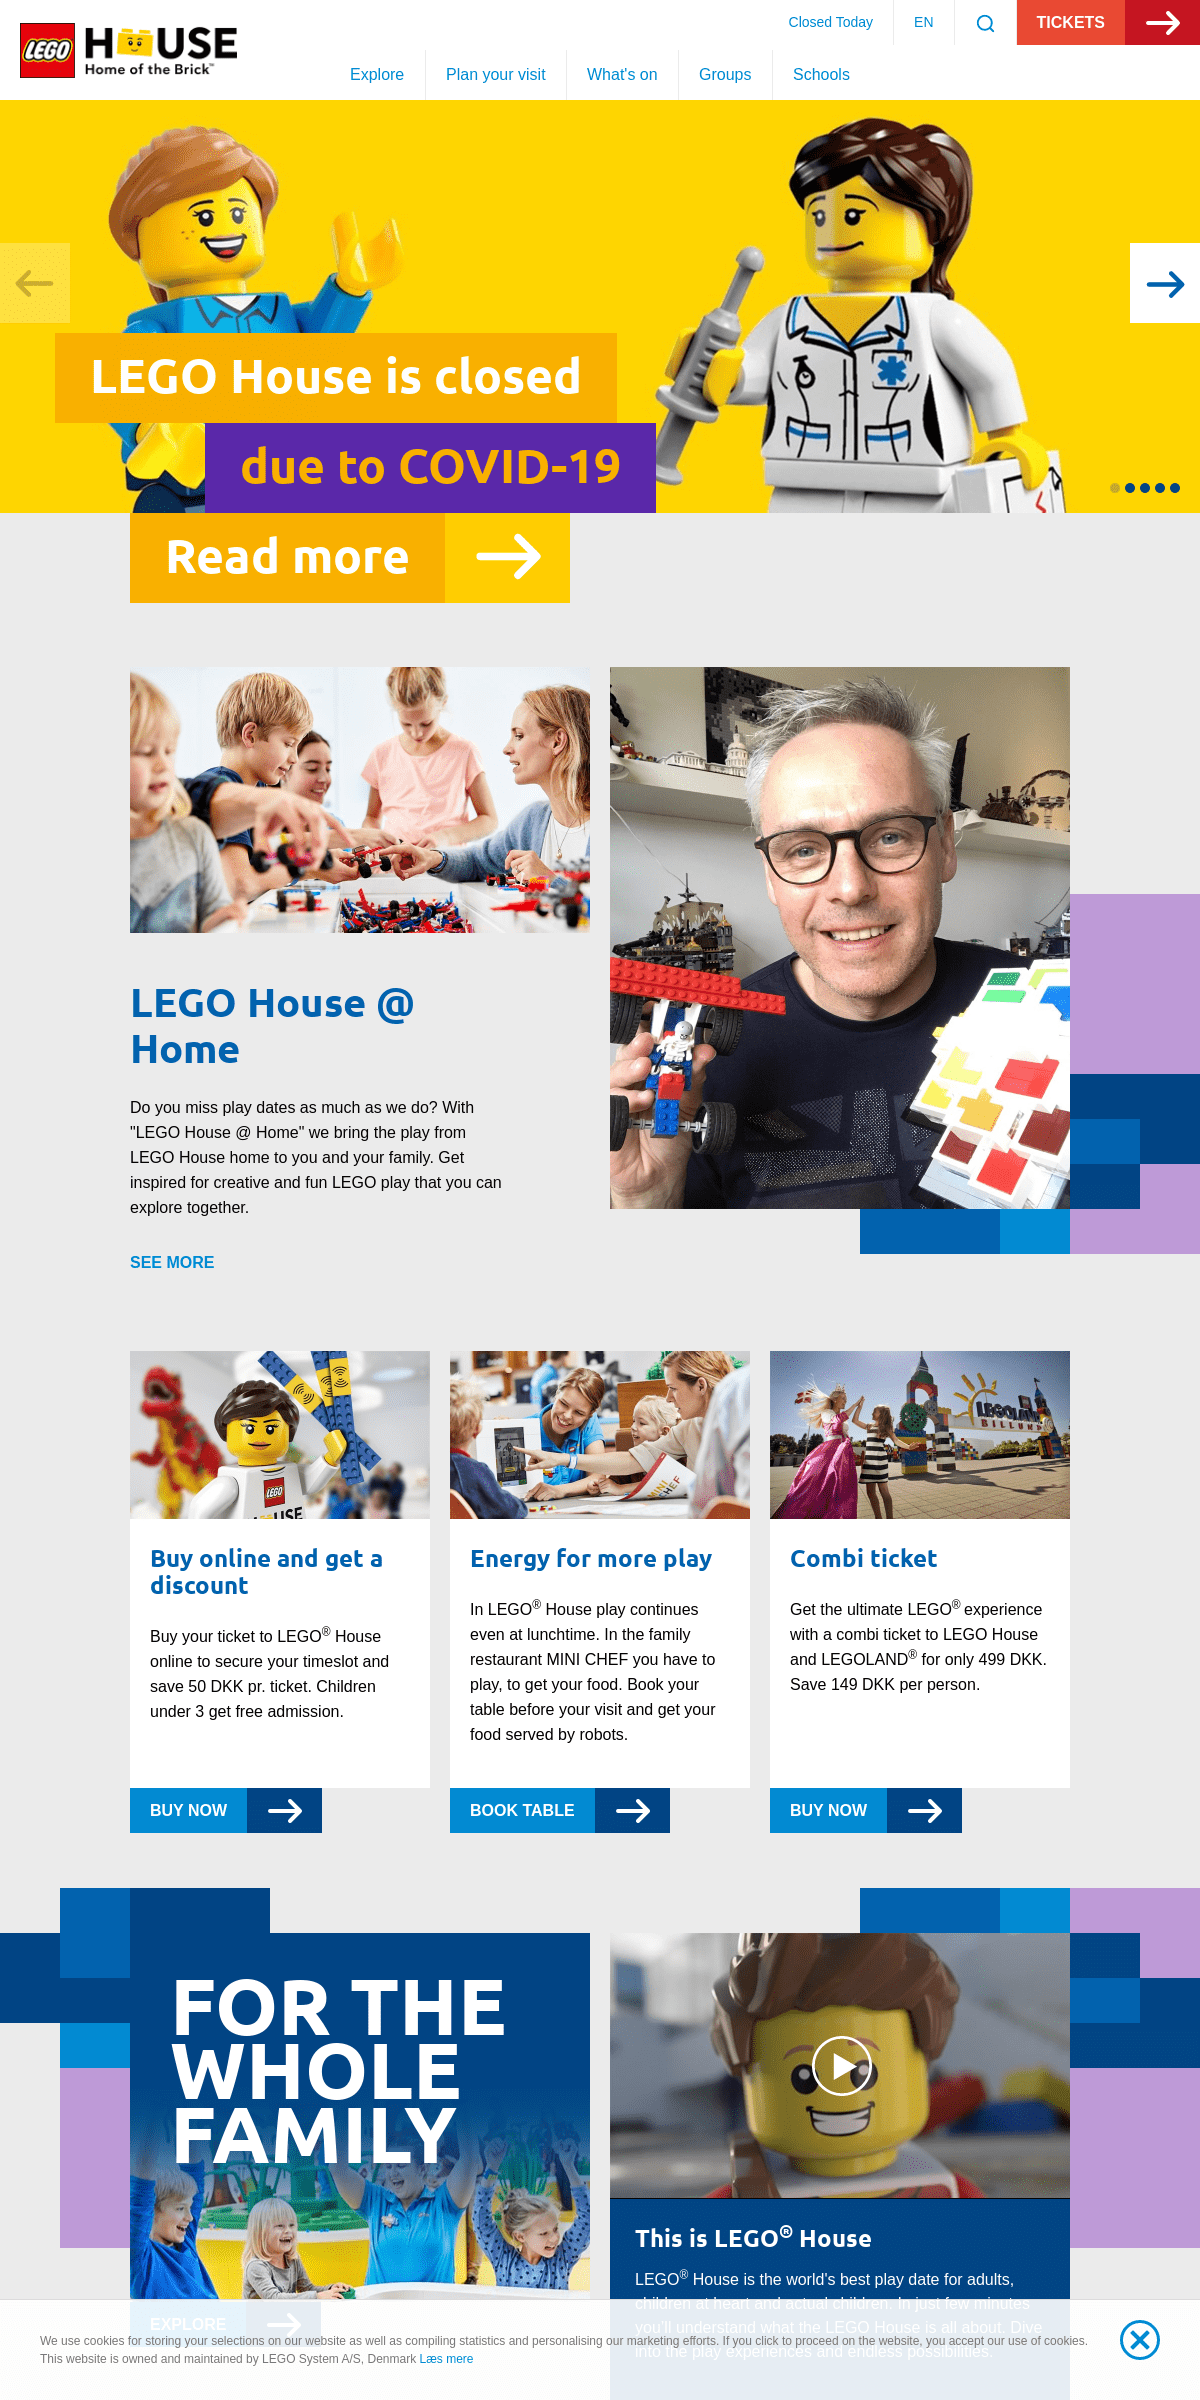 A complete backup of legohouse.com